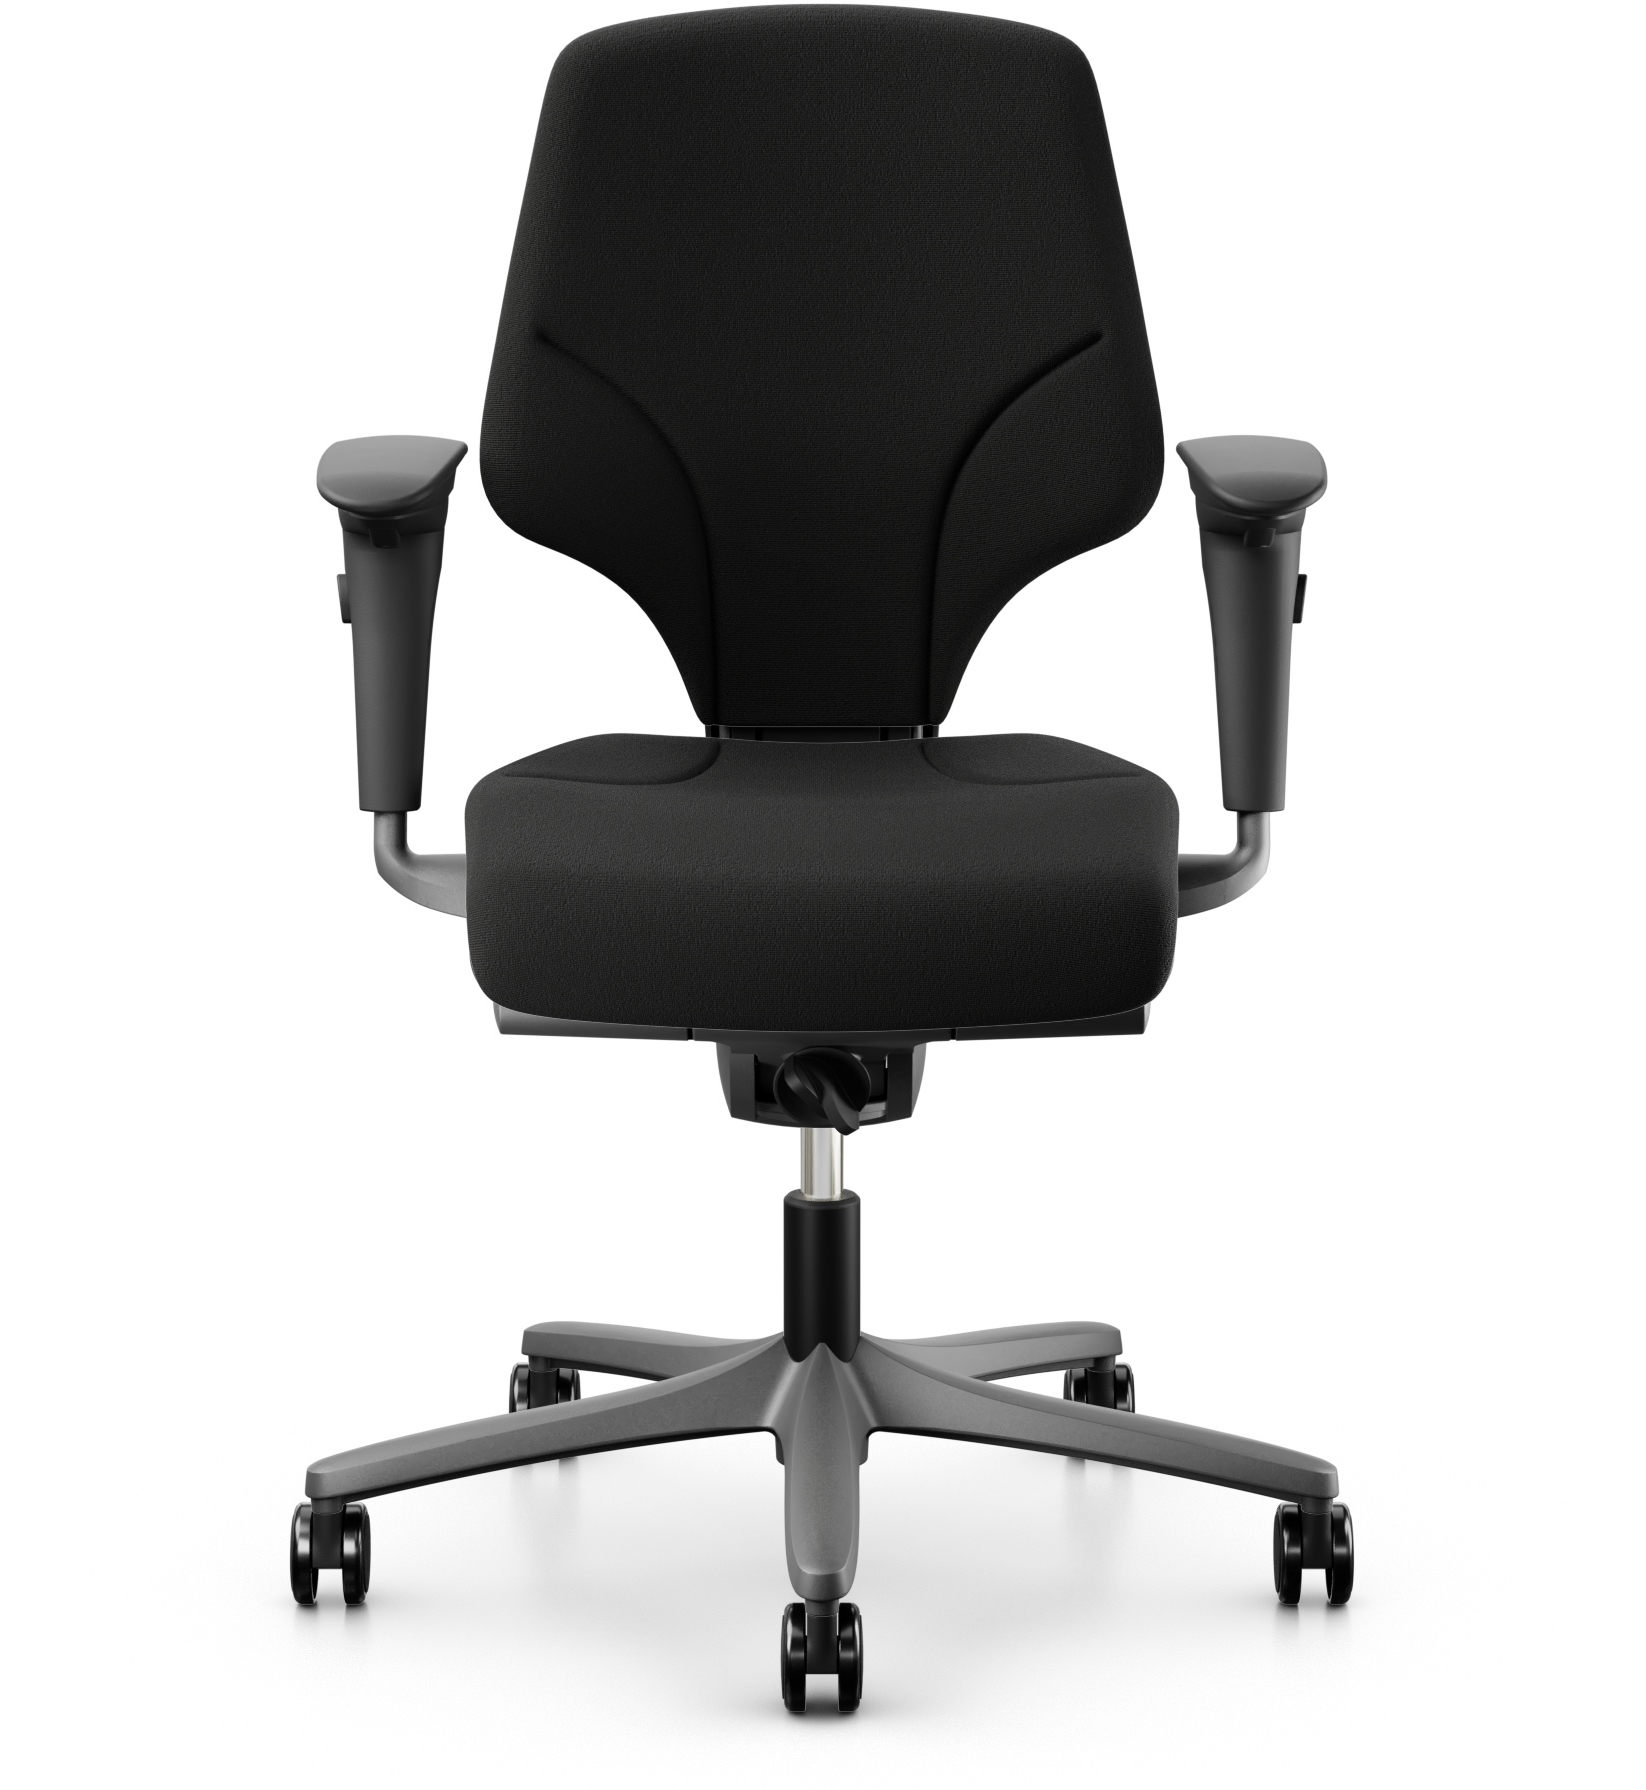 GIROFLEX Chaise de bureau 64 64-3078 noir/anthracite